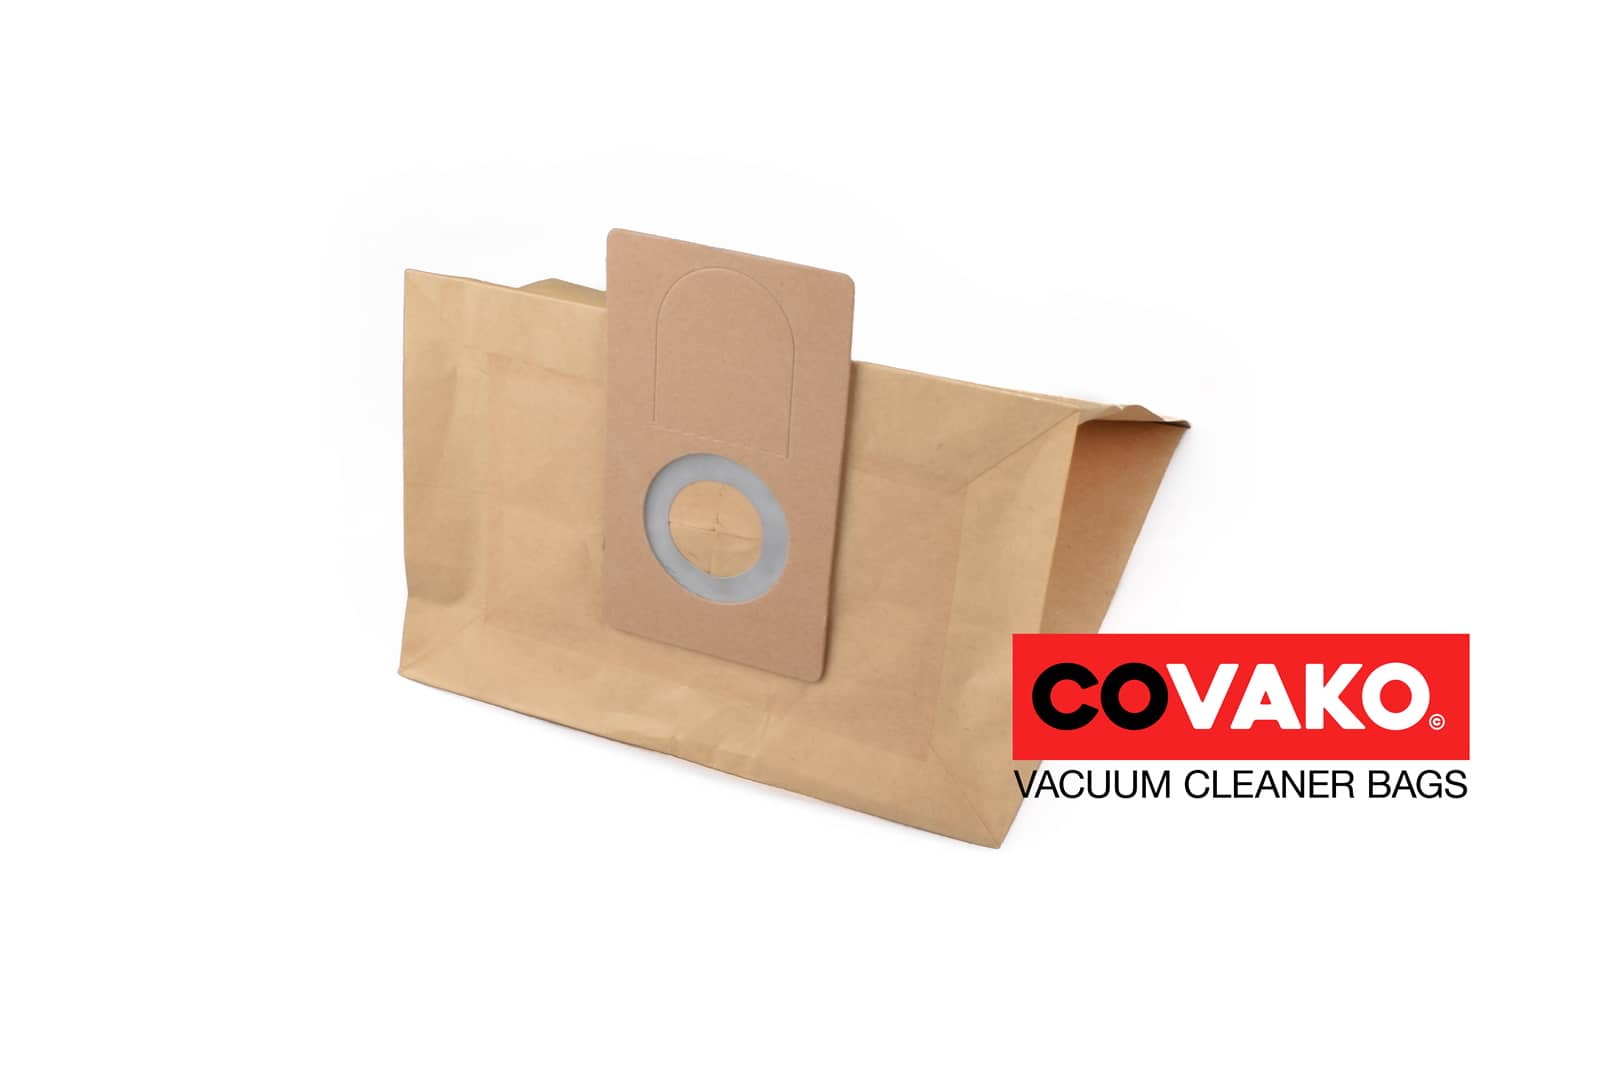 Clean a la Card S2 / Paper - Clean a la Card vacuum cleaner bags